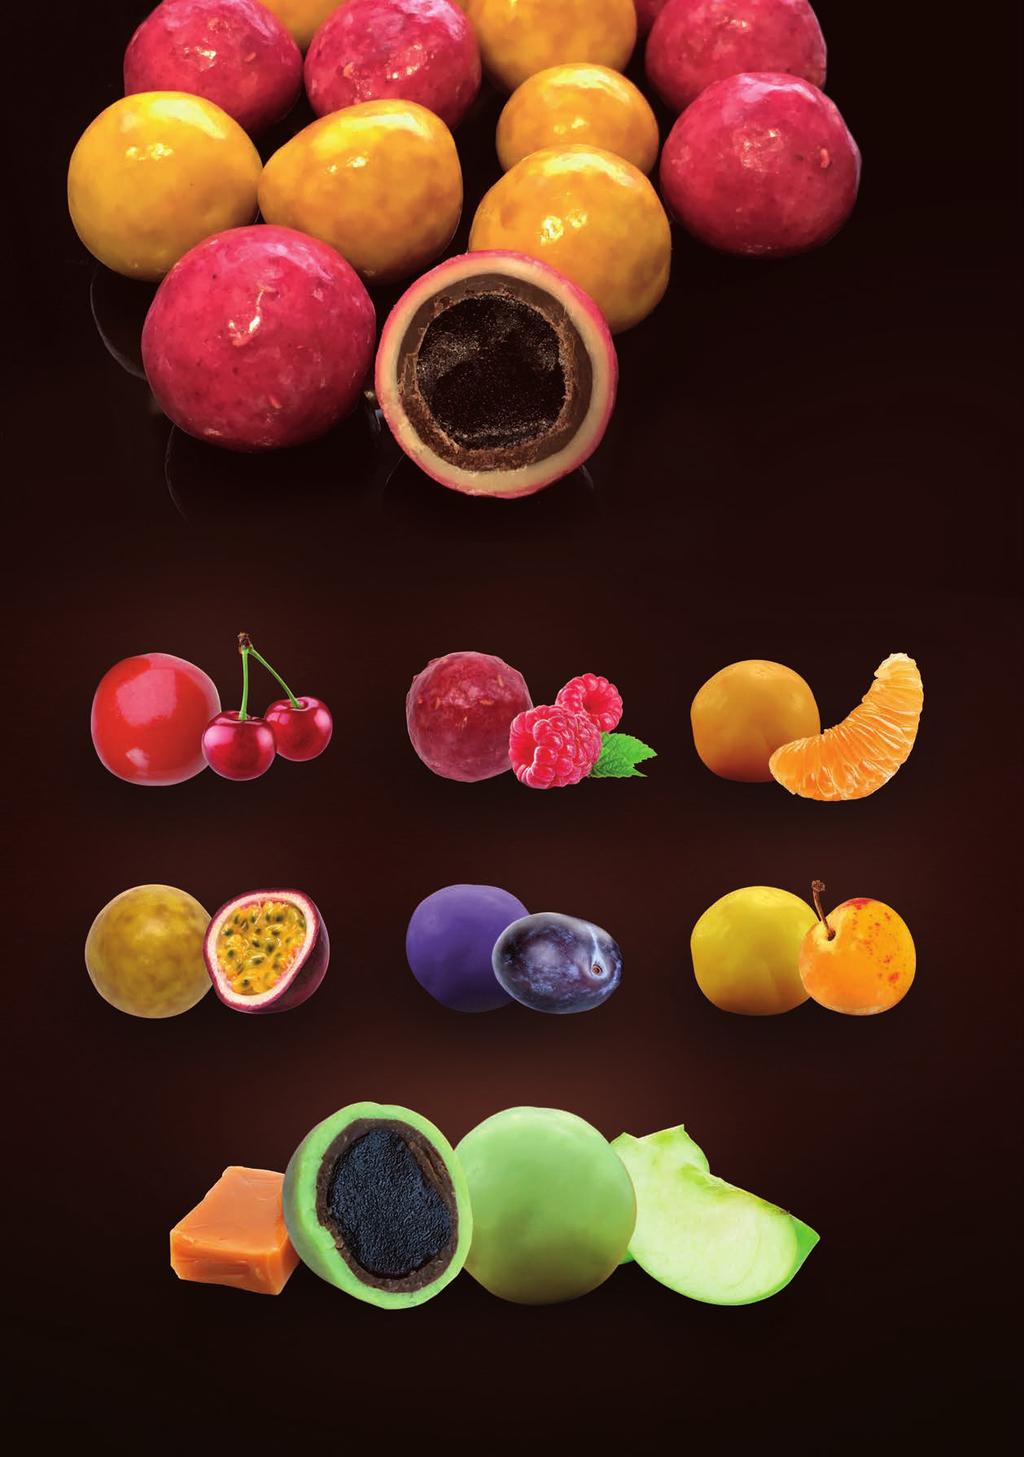 Coeur pâte de fruit enrobé de chocolat Jelly fruit center coated with chocolate Perle de Fruits Cerise - Cherry Framboise -